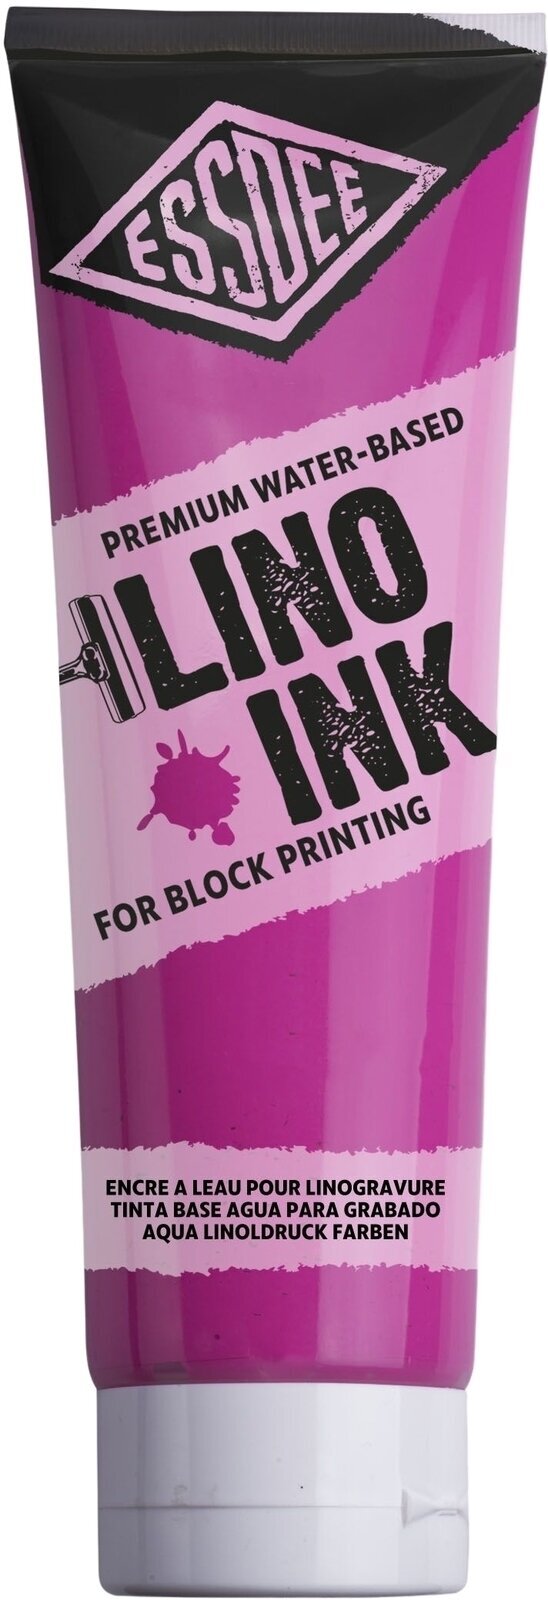 Vernice per linoleografia Essdee Block Printing Ink Vernice per linoleografia Fluorescent Pink 300 ml